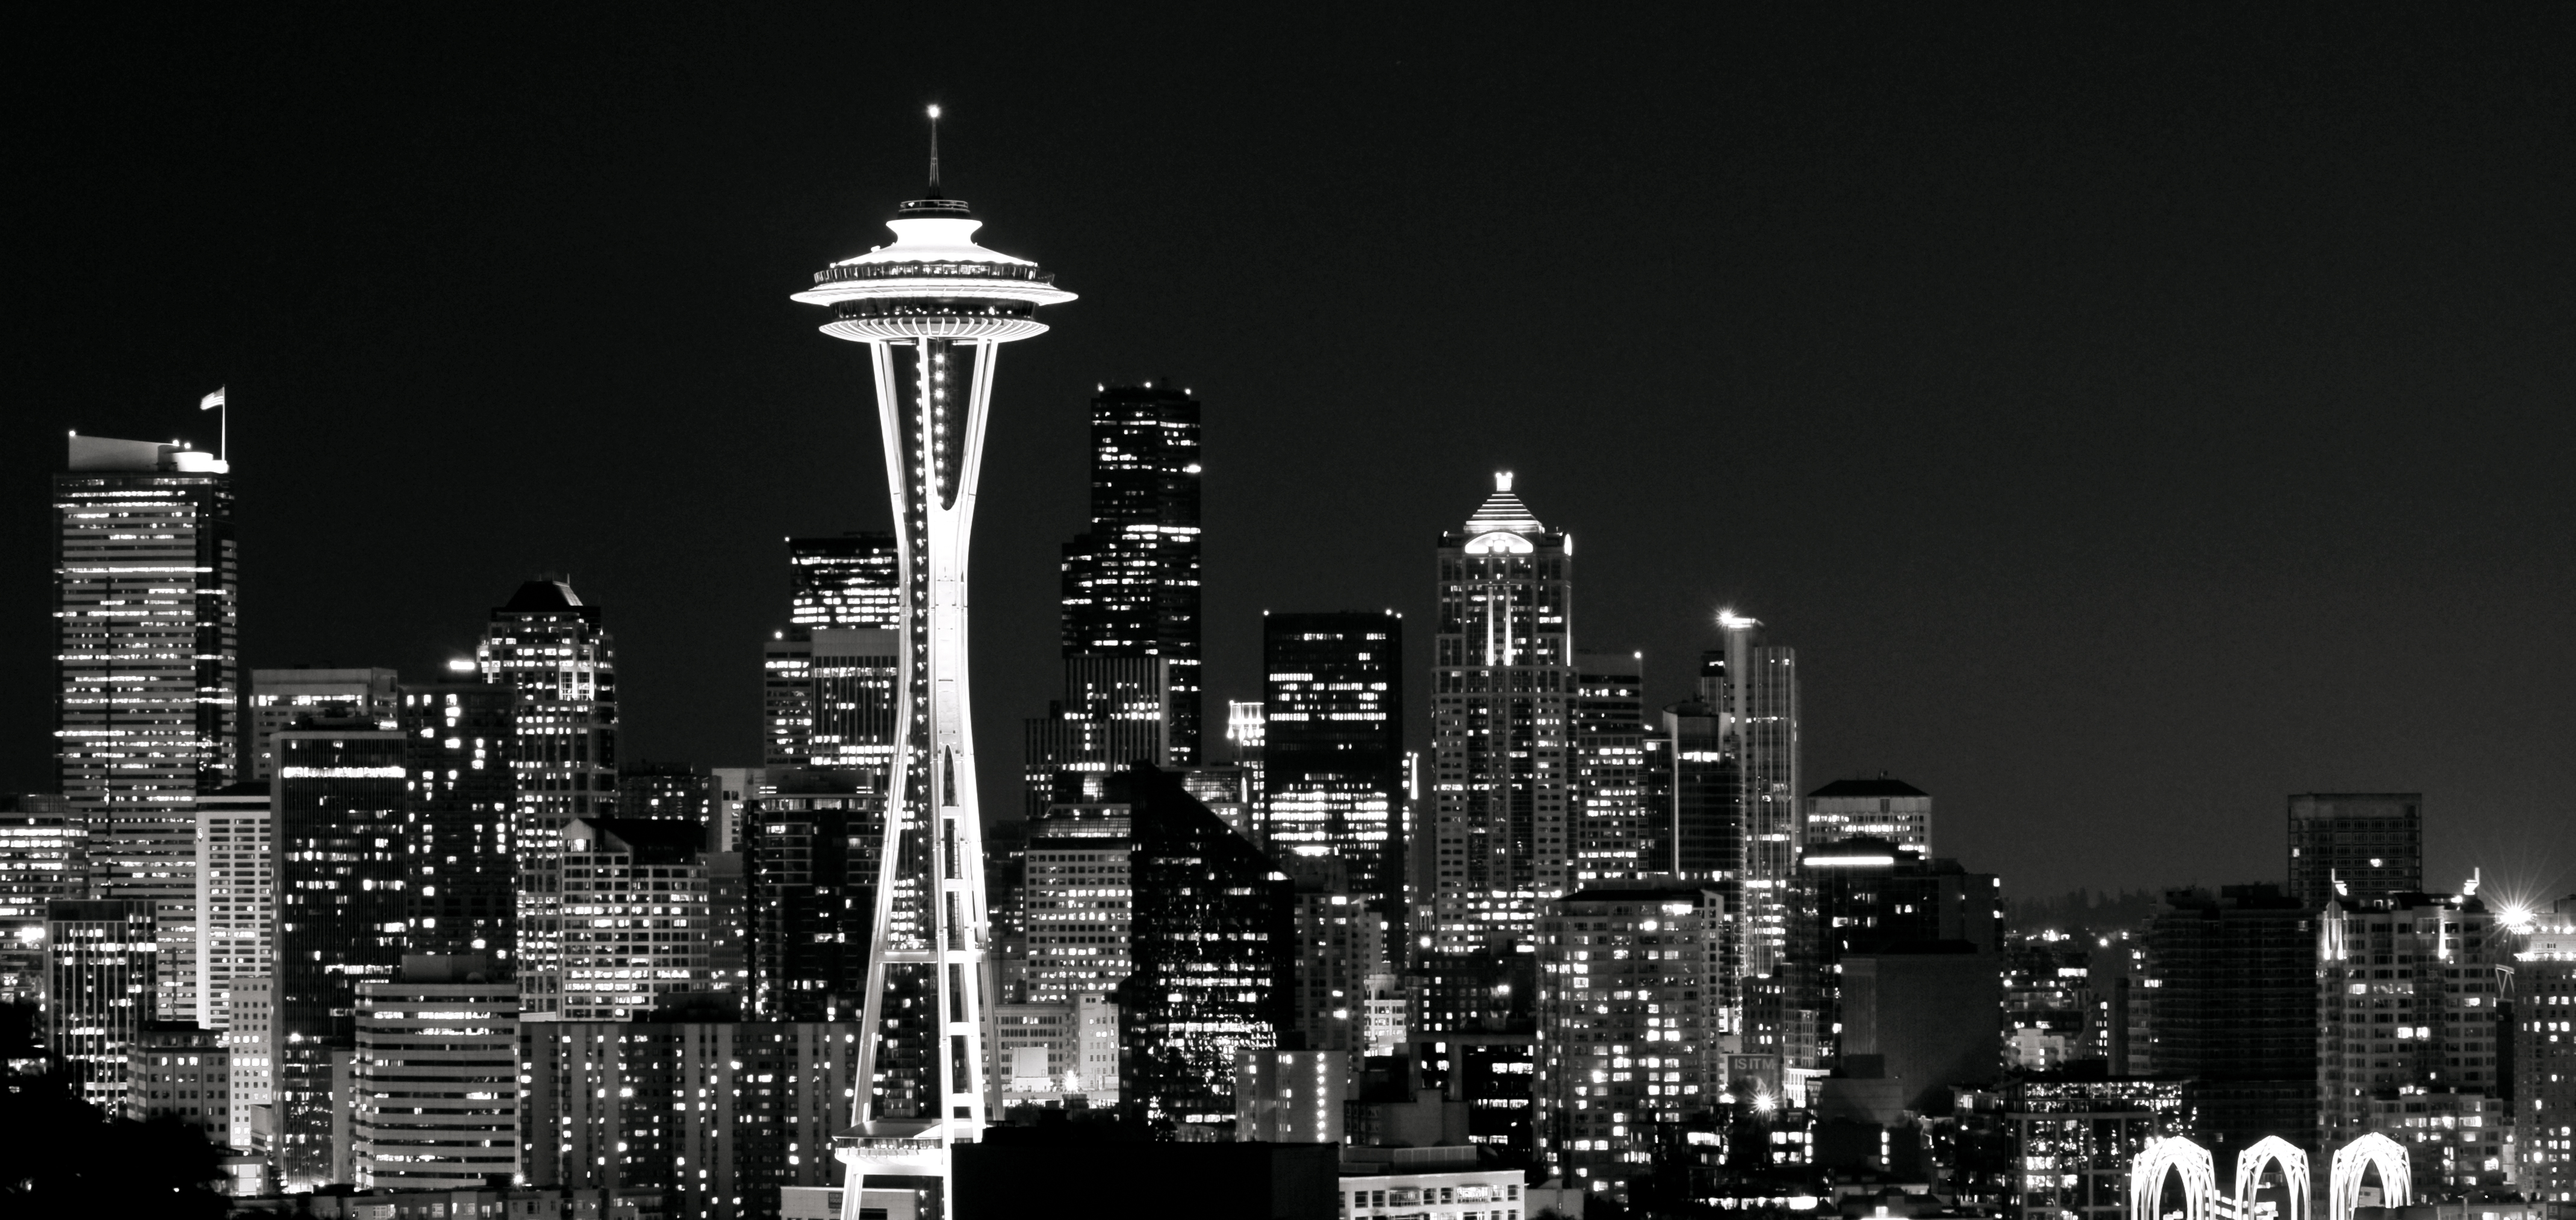 Seattle Skyline At Night - 4278x2026 Wallpaper 